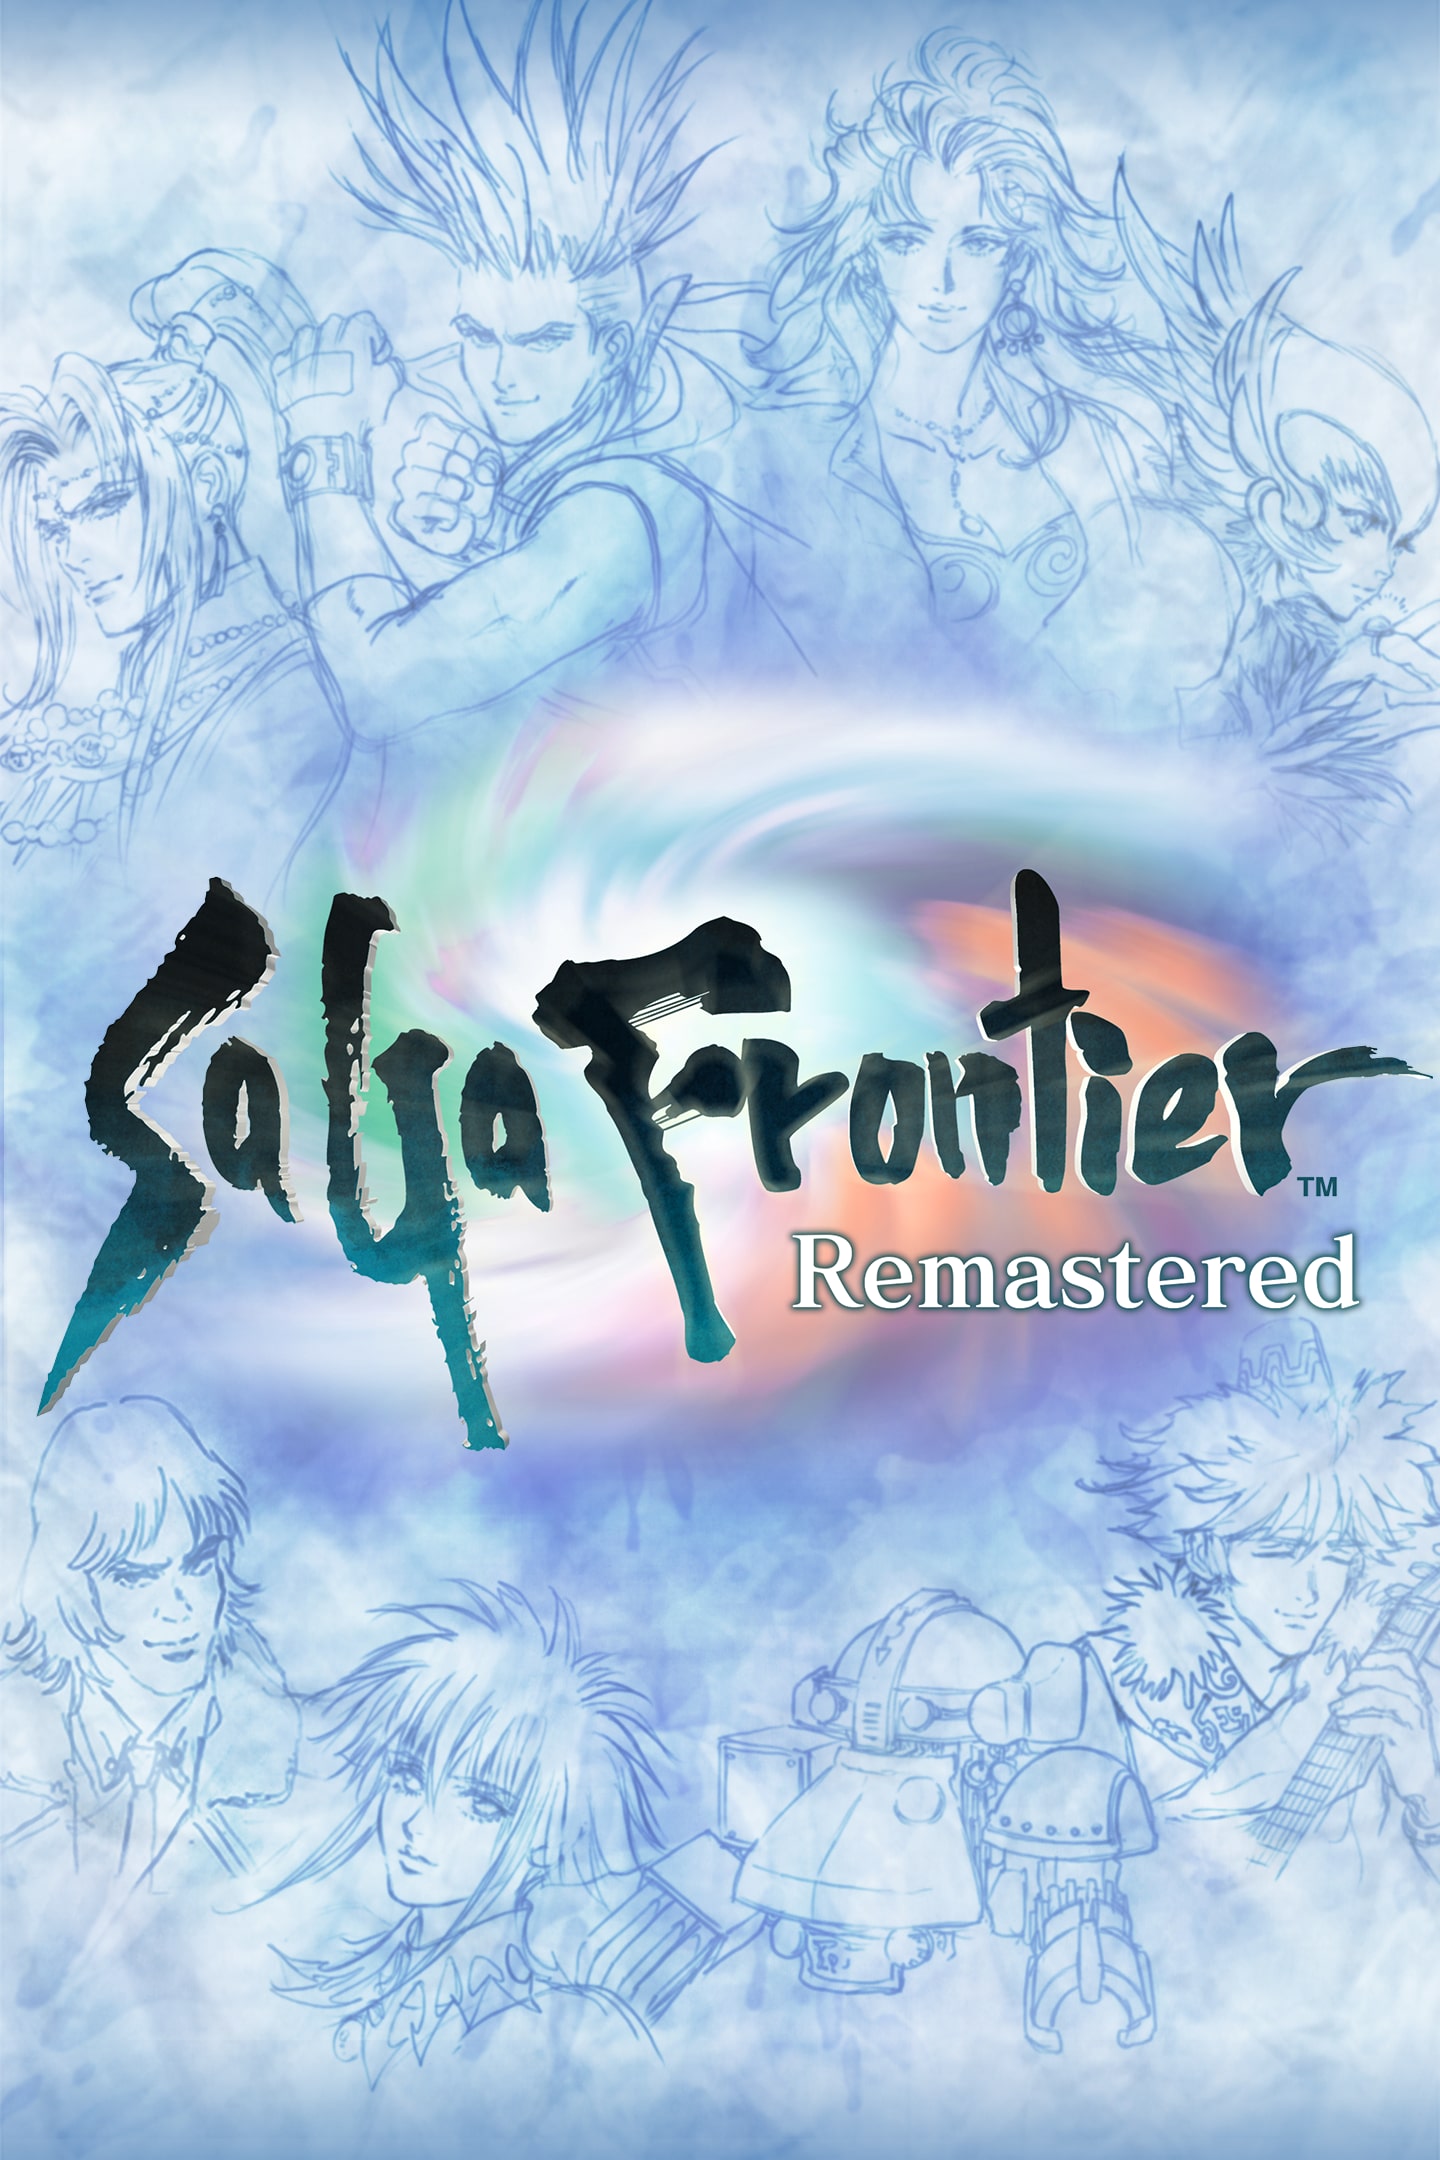 SaGa Frontier Remastered (English, Korean, Japanese, Traditional